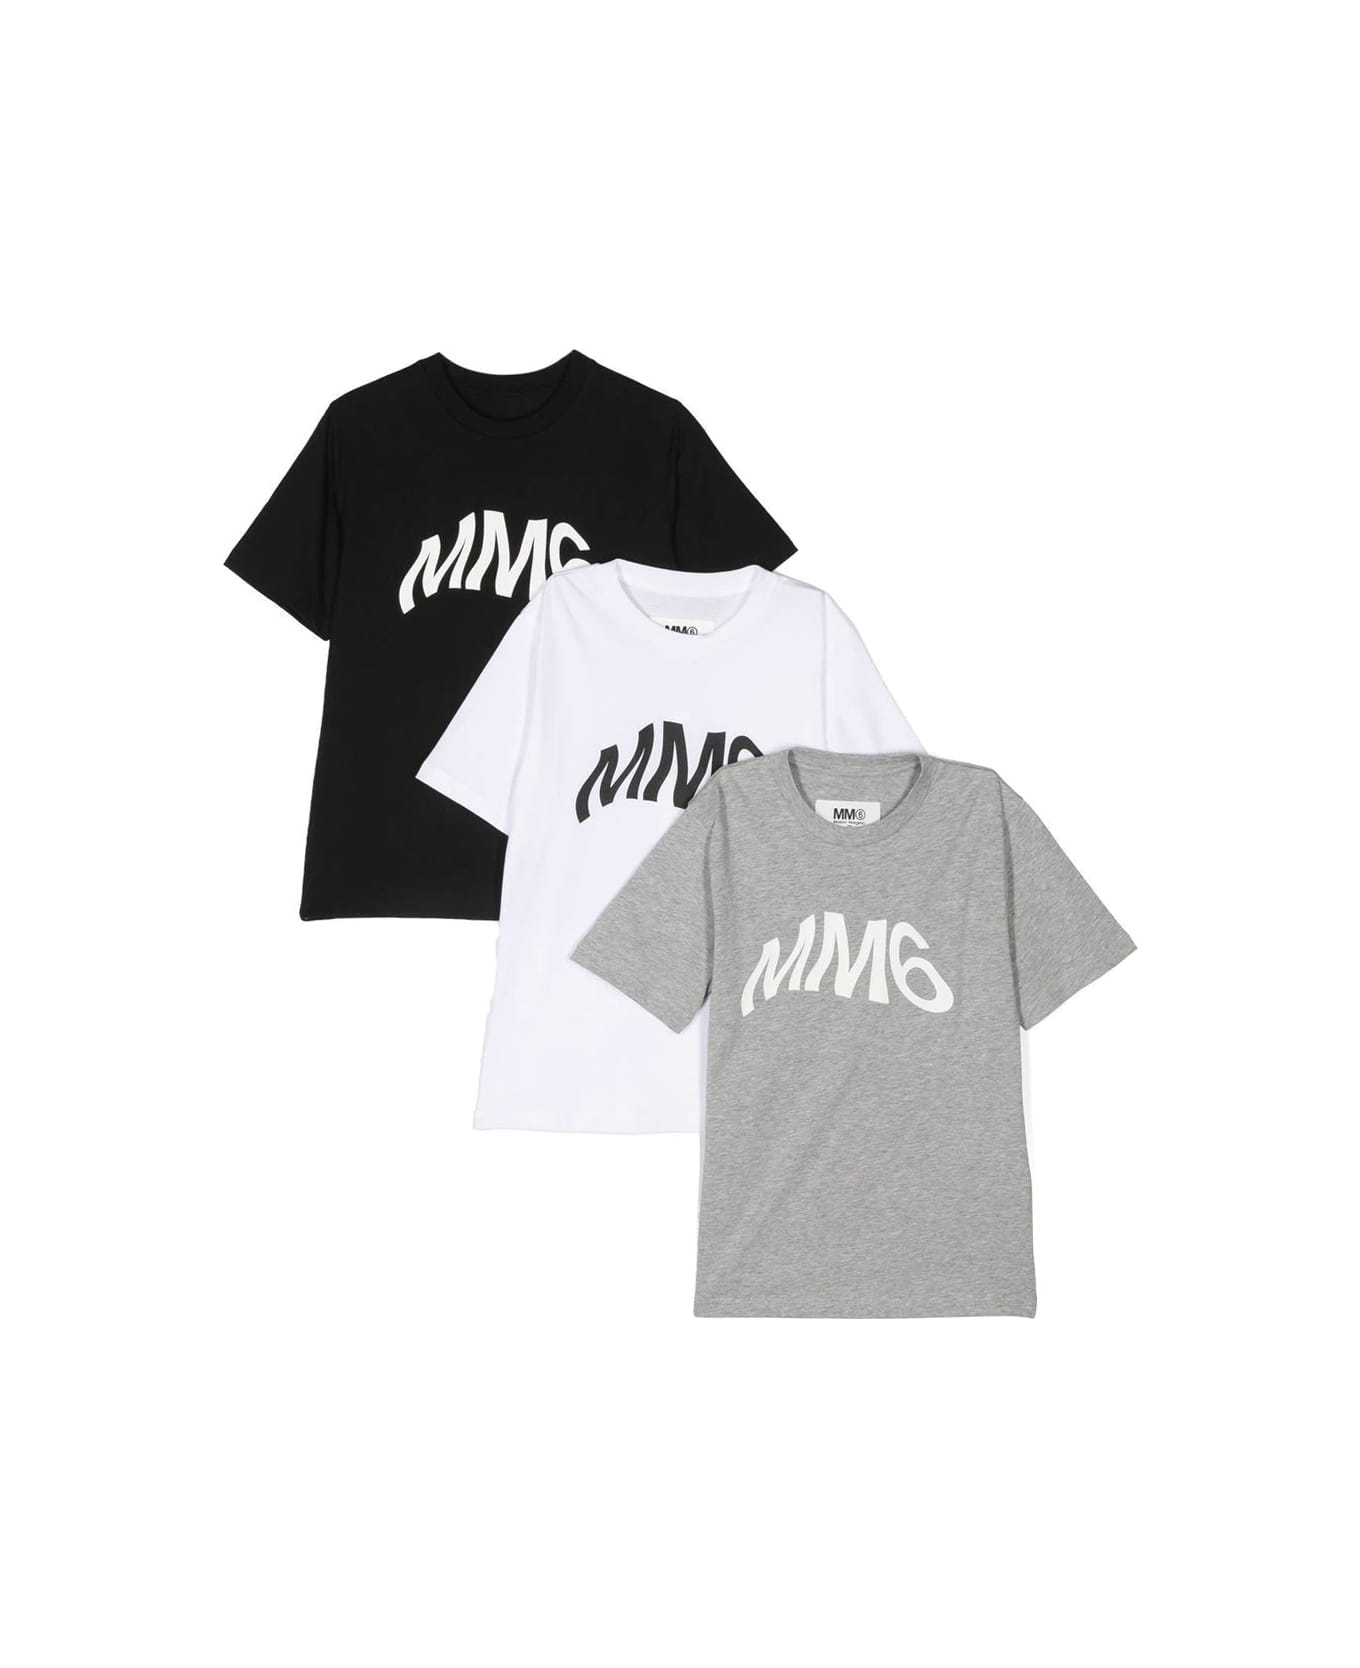 MM6 Maison Margiela Mm6t46u Three-pack Short Sleeve T-shirt - Black.white.grey Melange